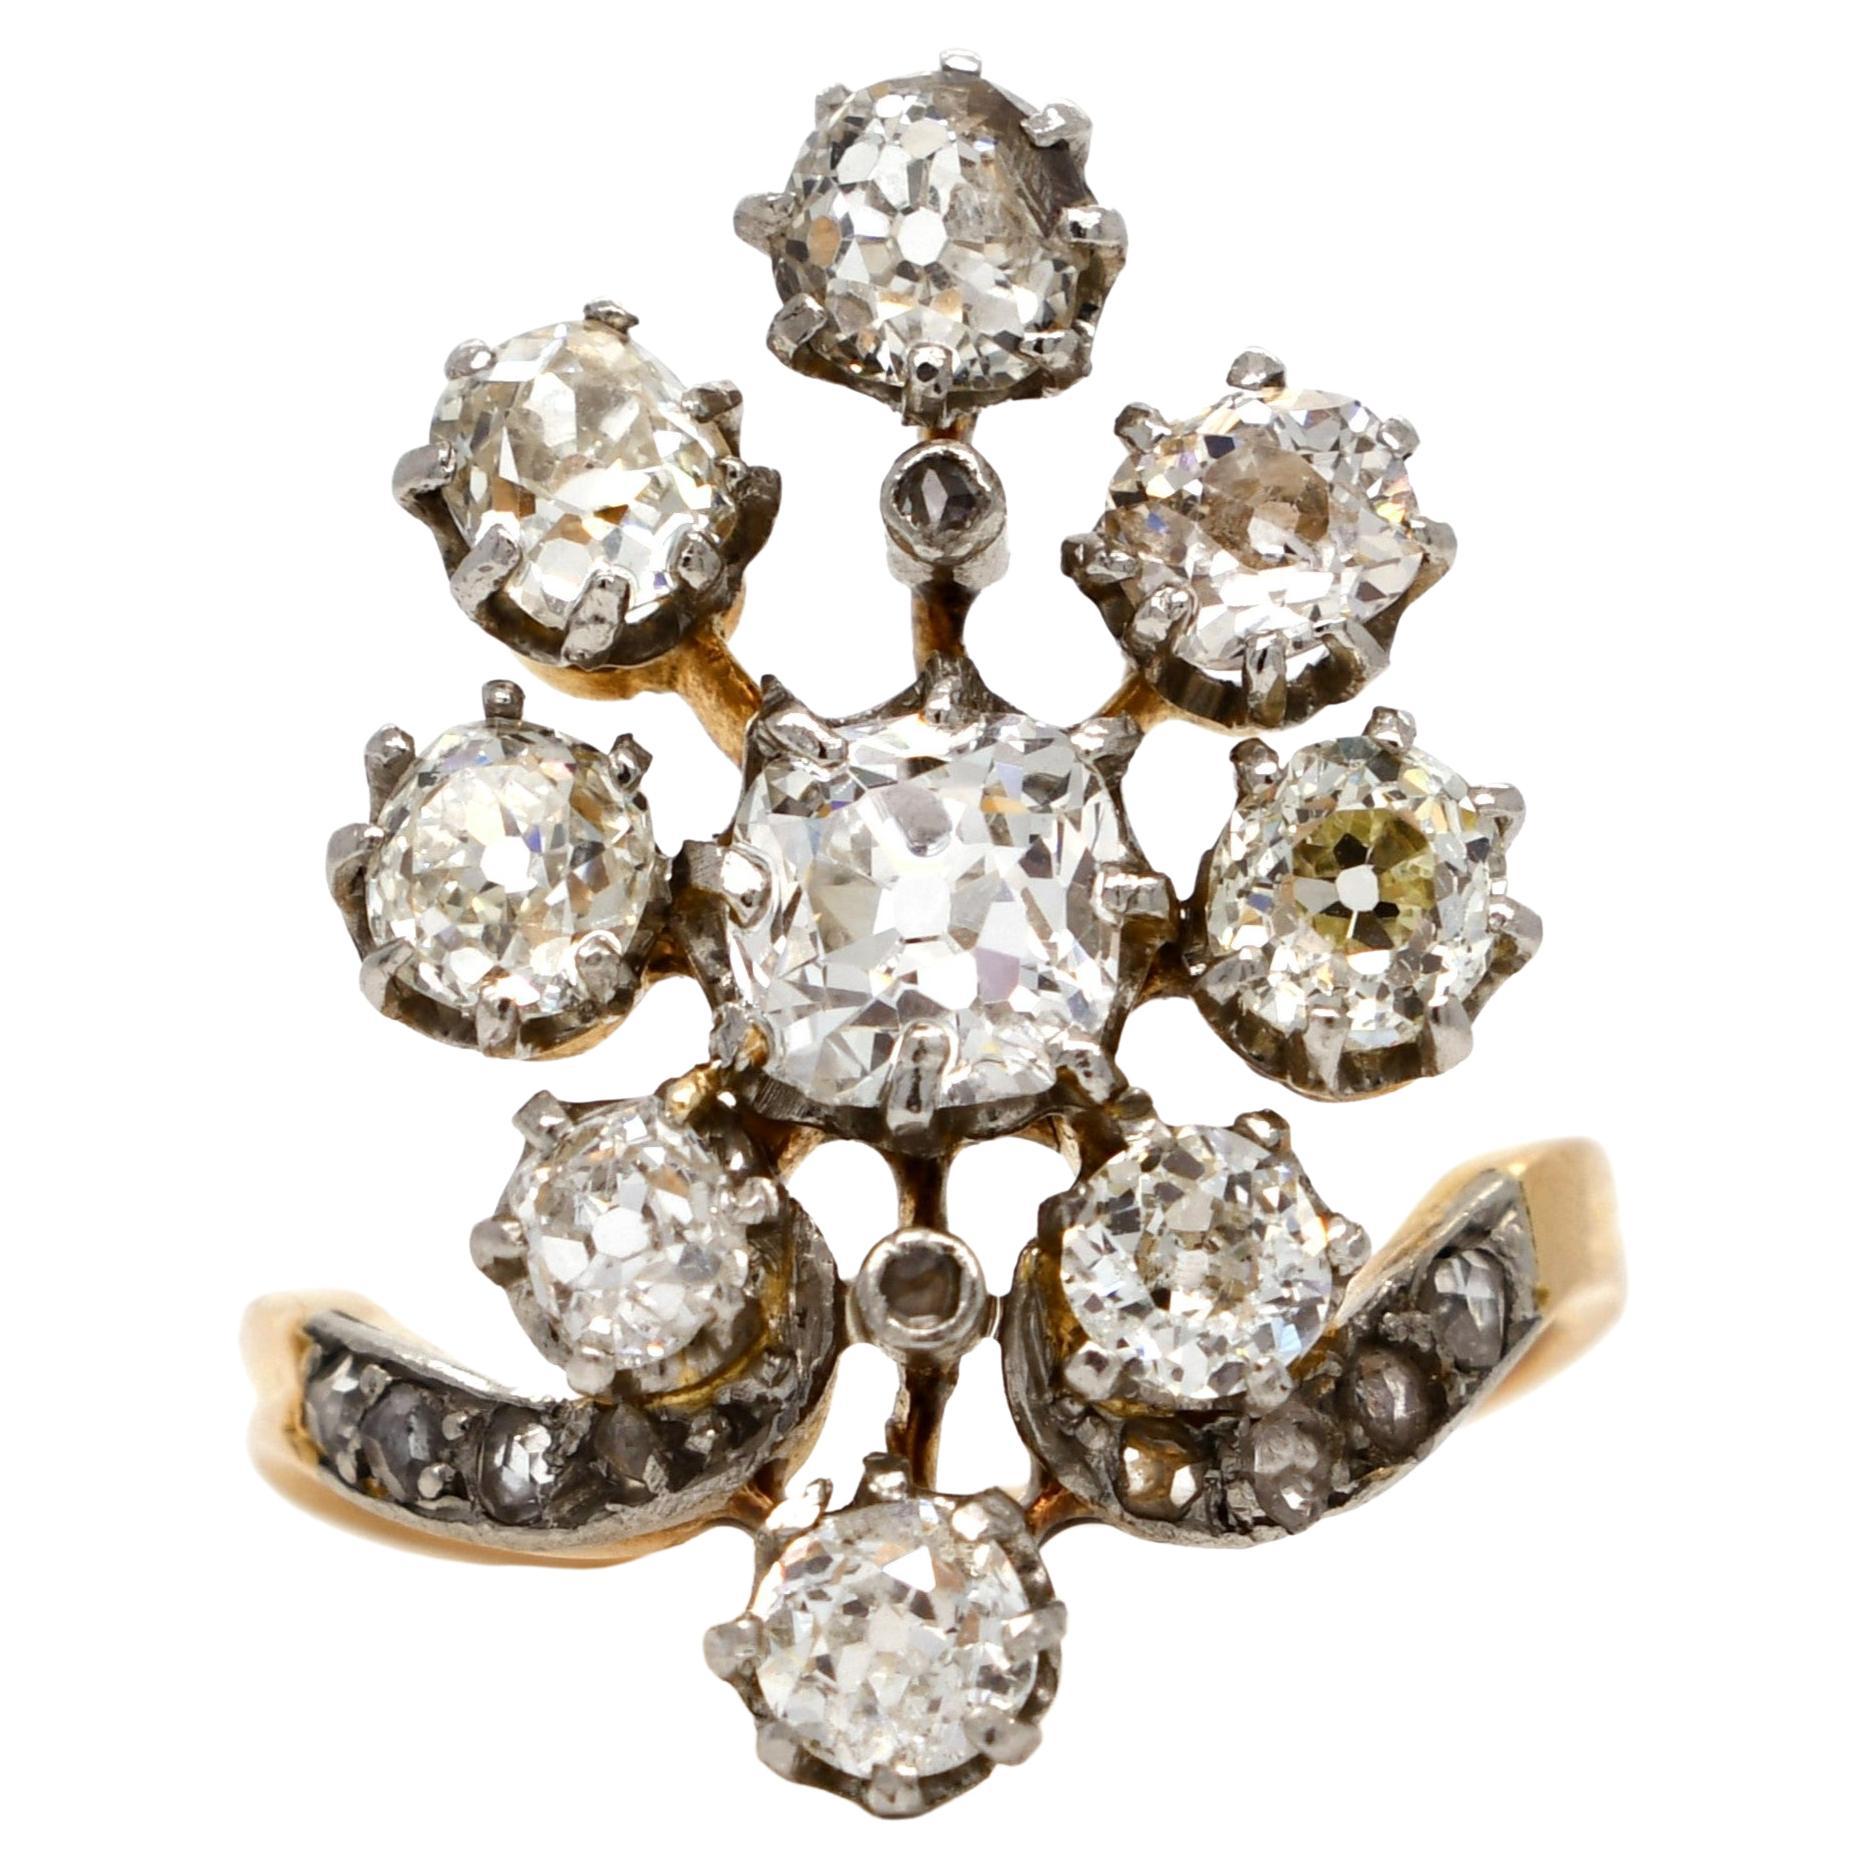 Antique 3.00ct old mine cut diamond tiara ring, France around 1900